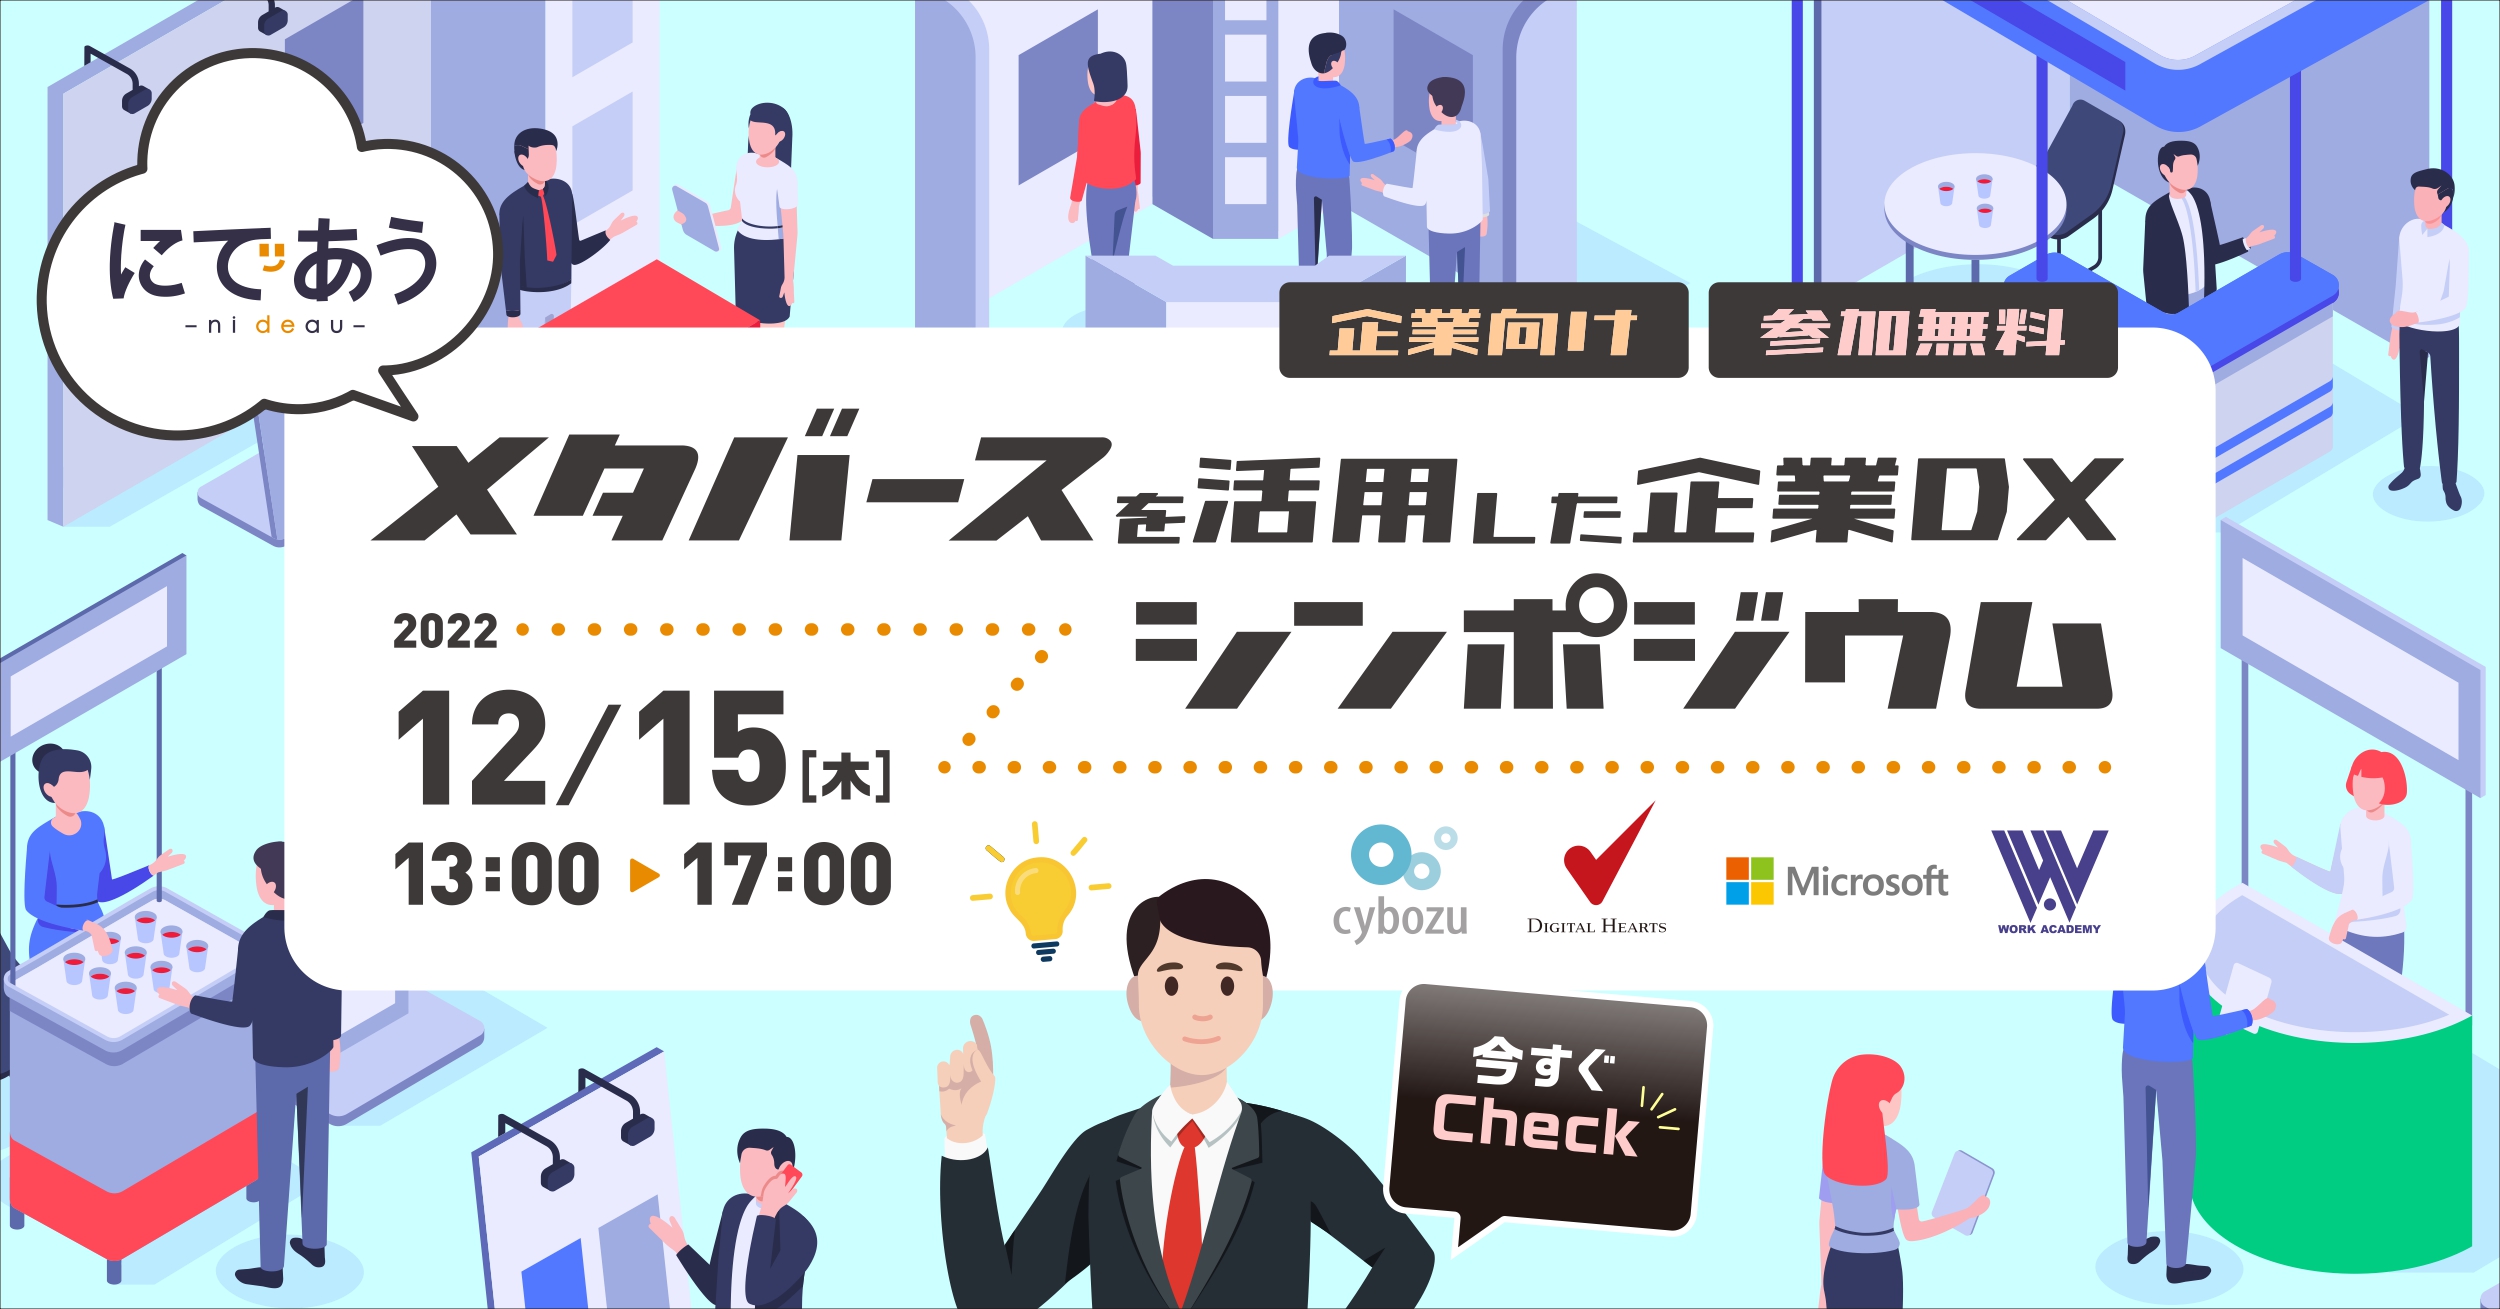 「ZIKU」が大阪府が開催する「メタバースを活用した企業DXシンポジウム」に採用